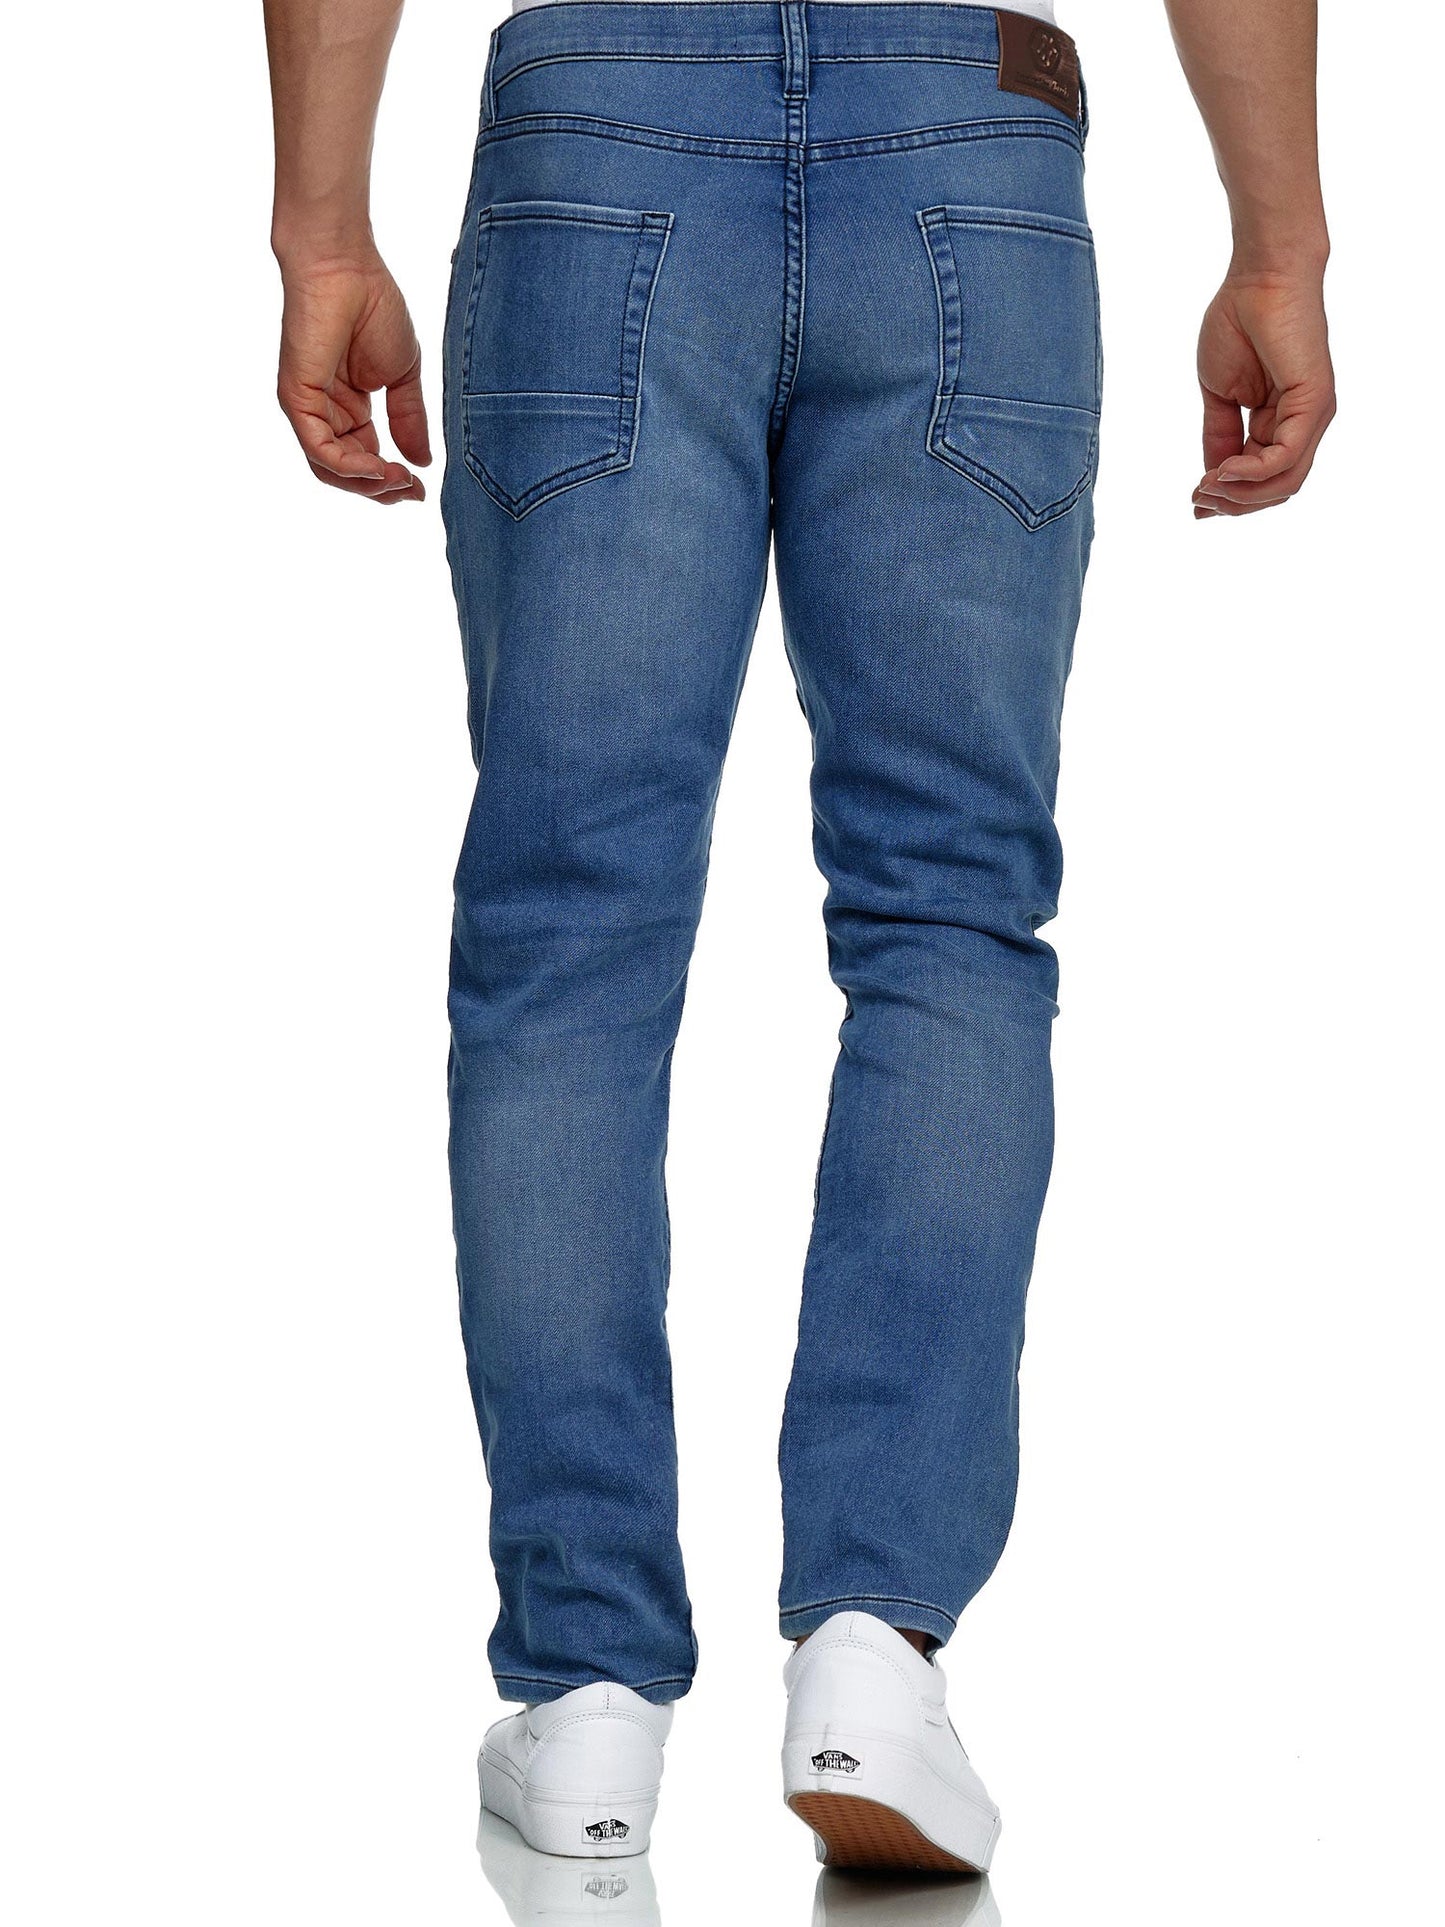 Tazzio Herren Jeans Regular Fit A106 Hellblau